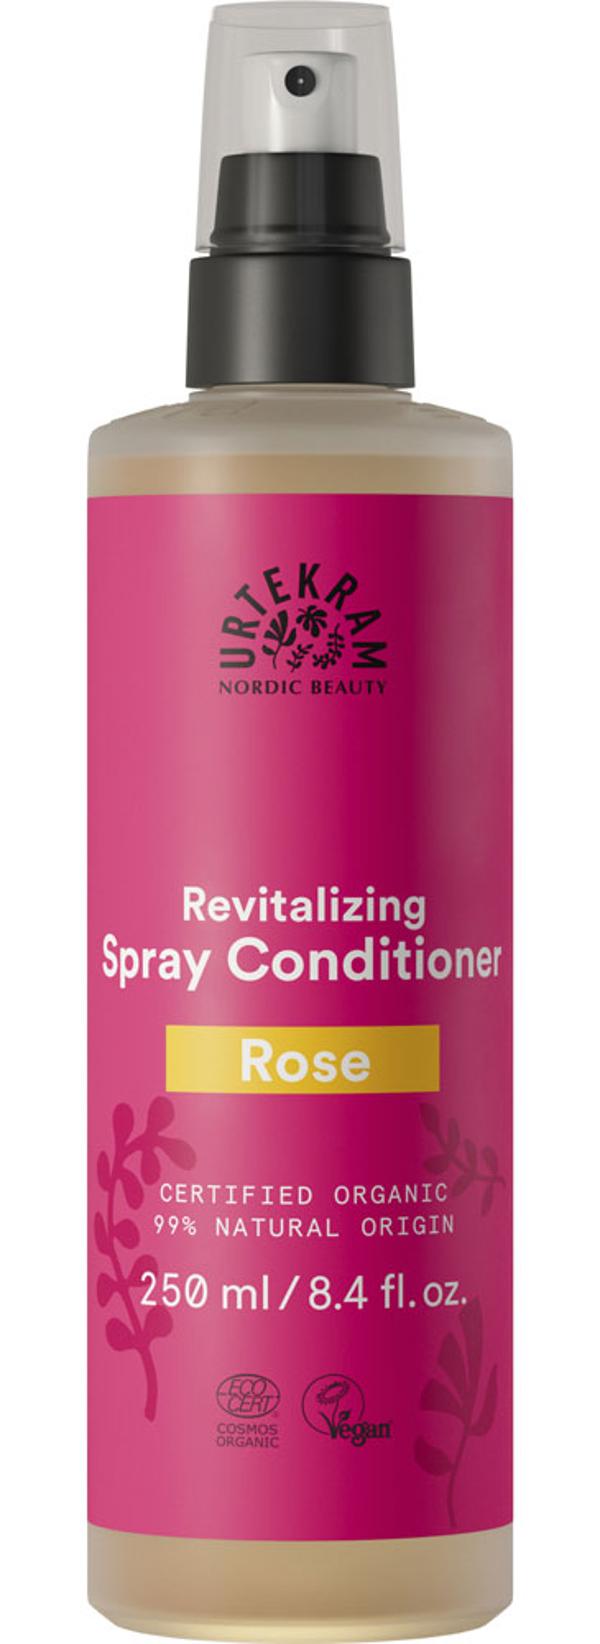 Produktfoto zu Urtekram Rose Spray Conditioner 250ml